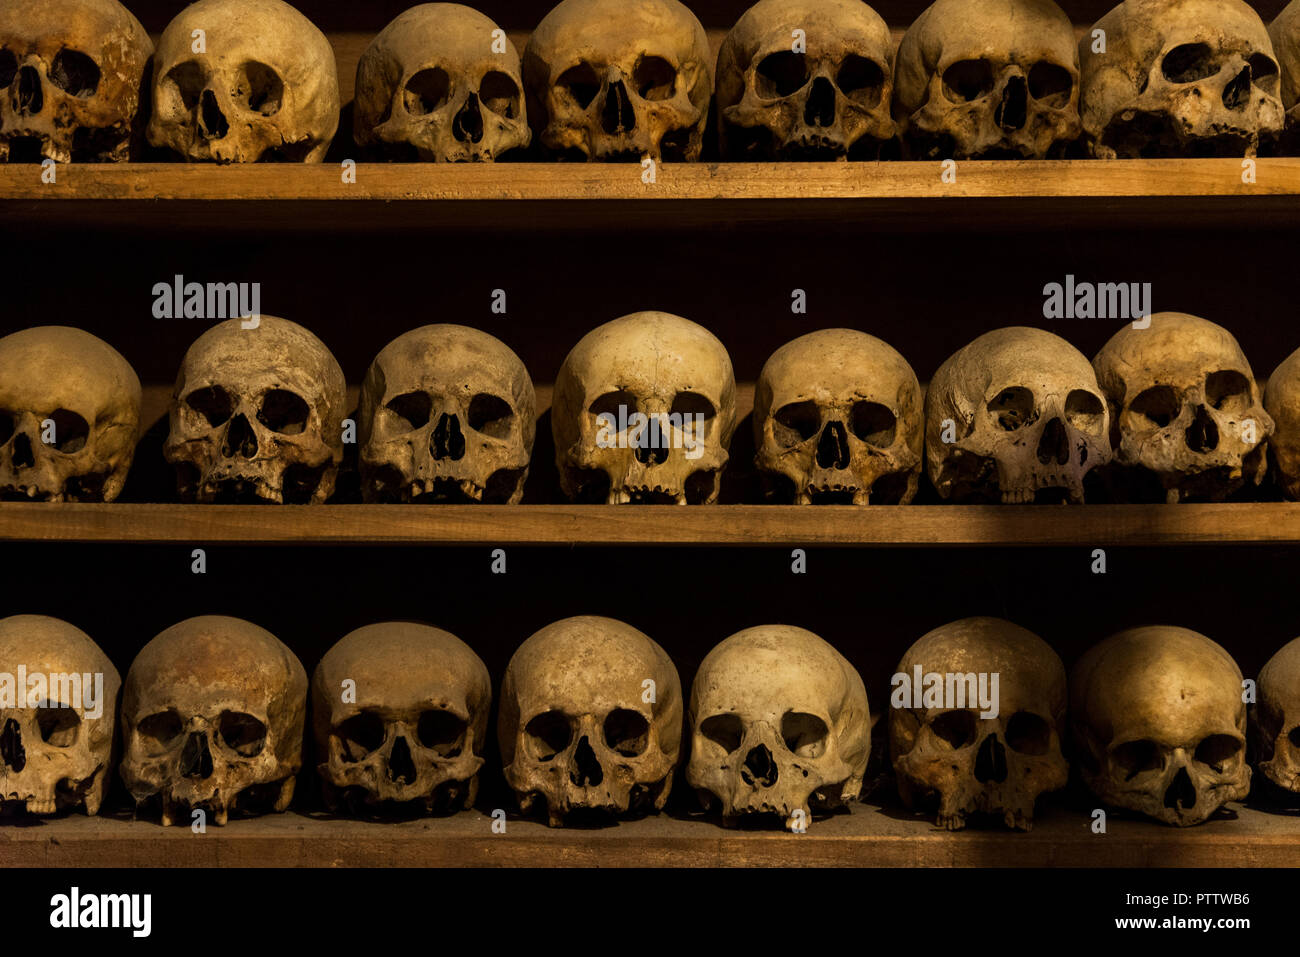 Real human skulls stacked on the shelf at Megalo Meteoro monastery. Stock Photo